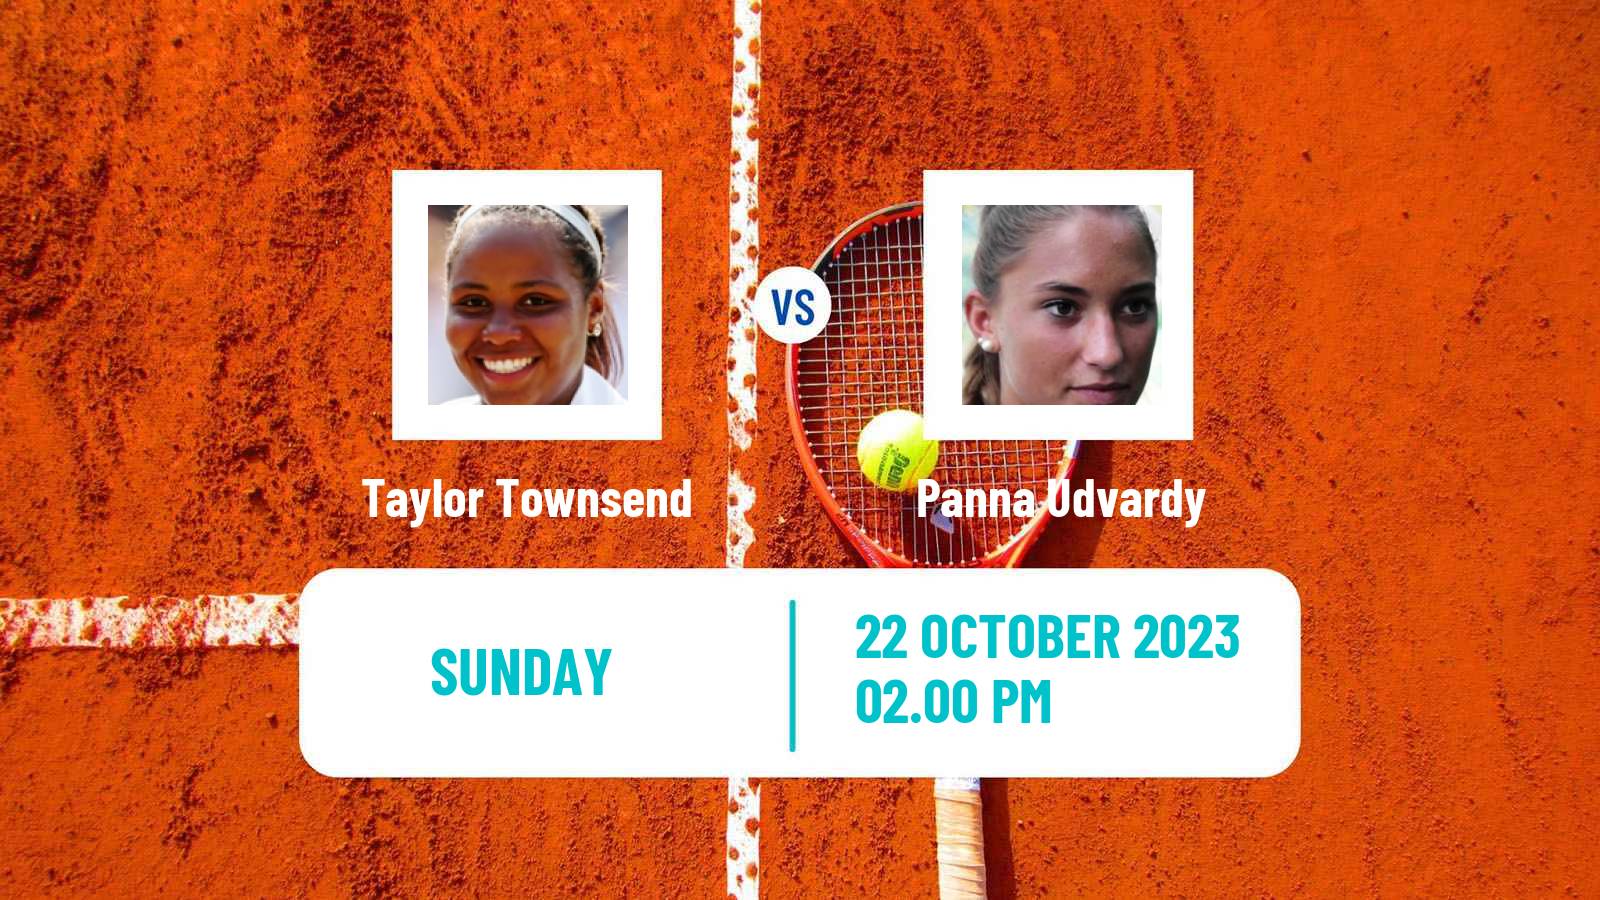 Tennis ITF W80 Macon Ga Women Taylor Townsend - Panna Udvardy